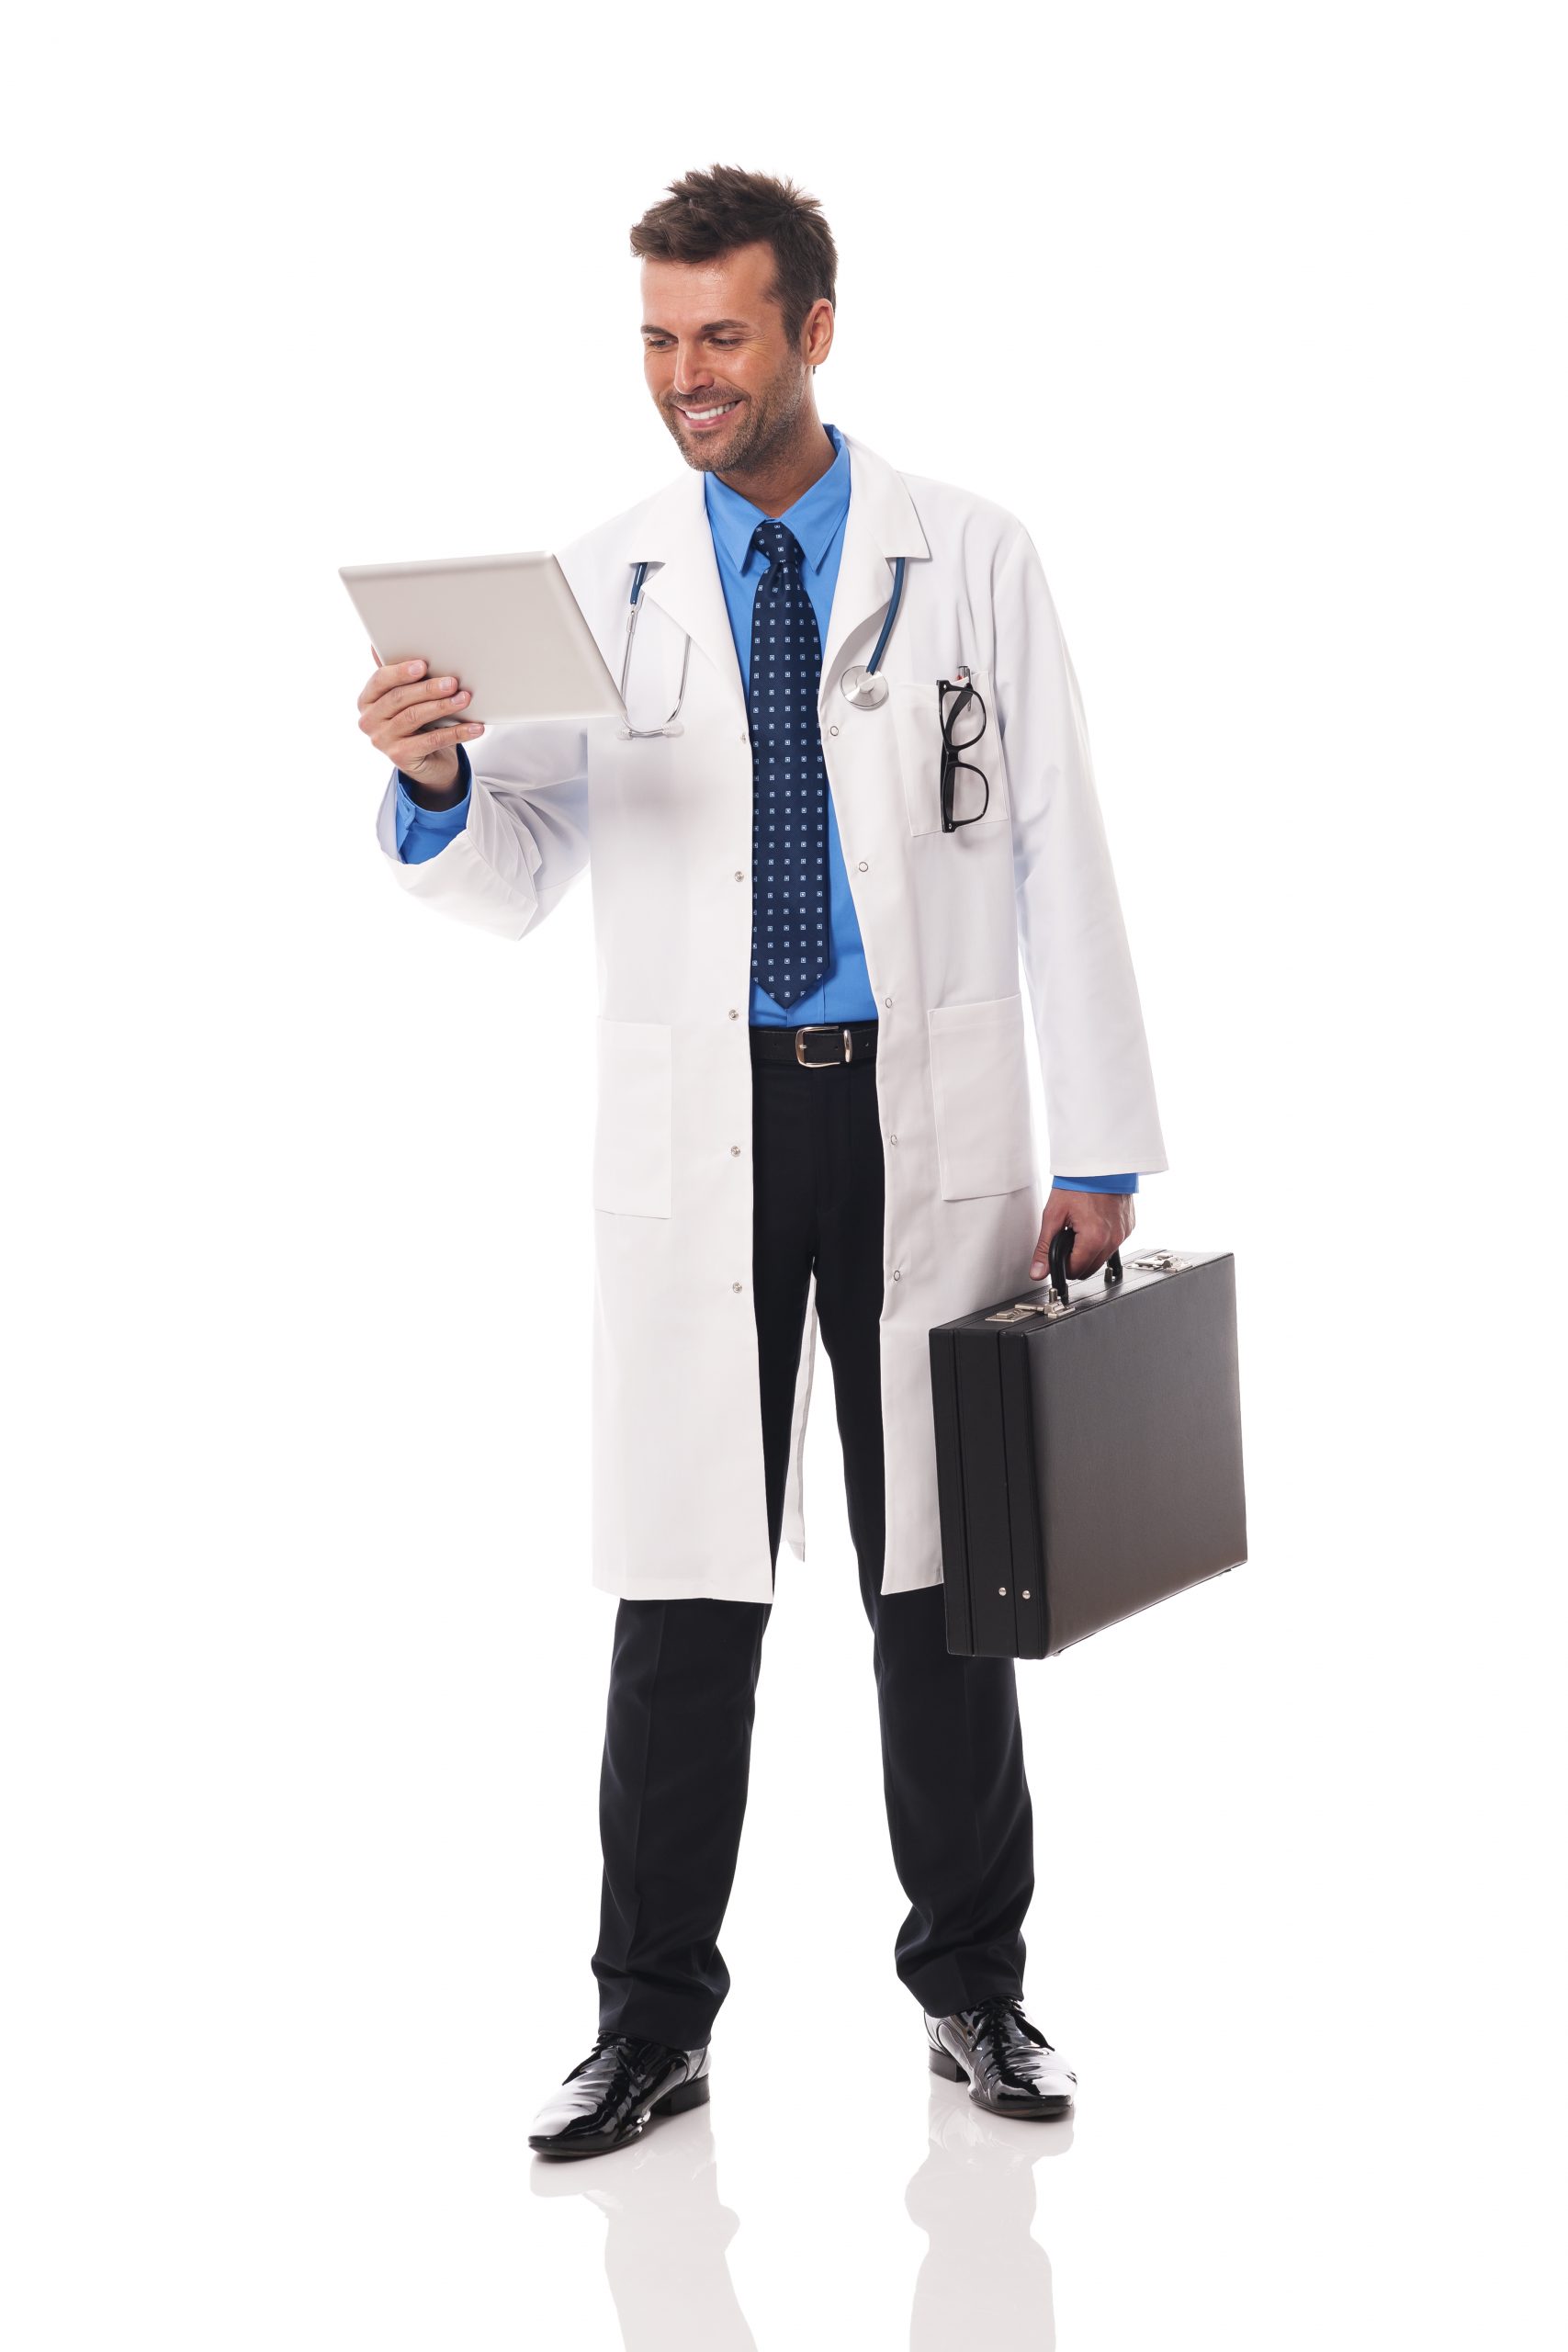 Smiling doctor checking something on digital tablet